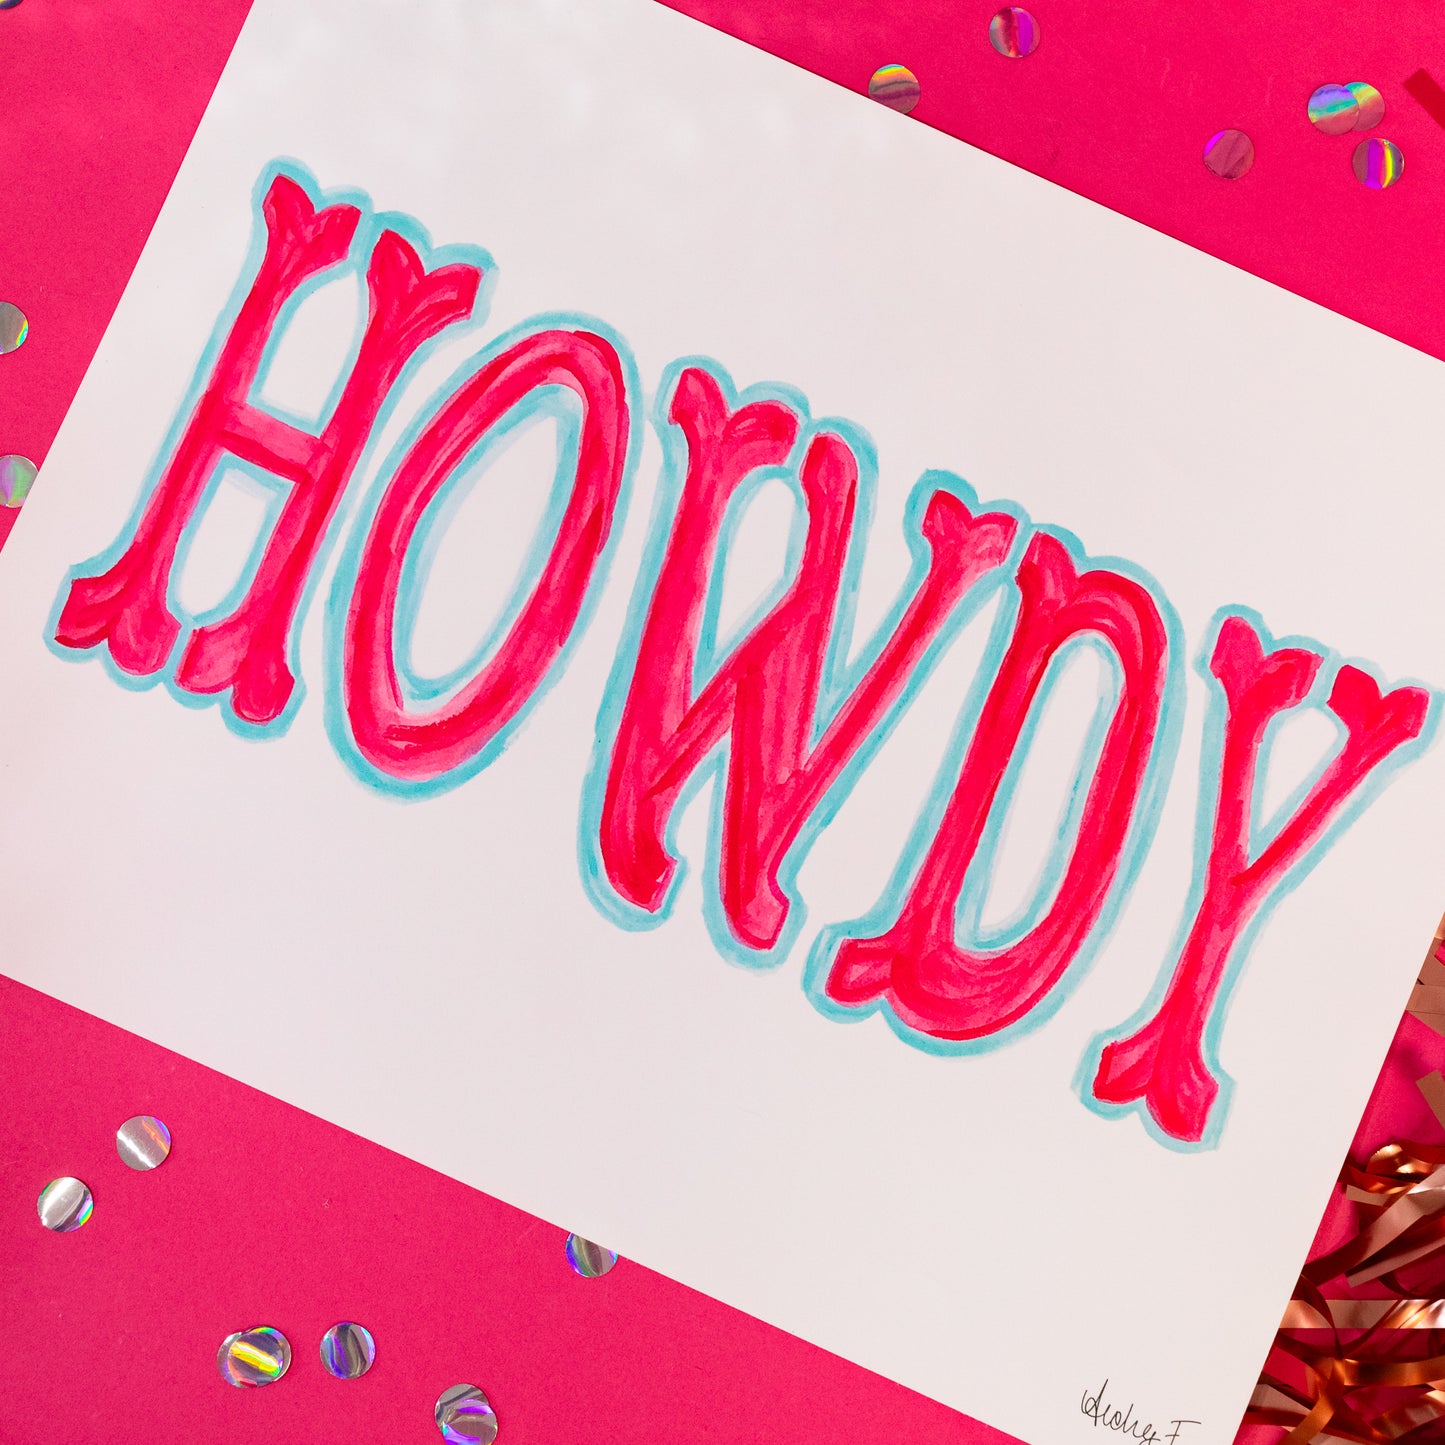 Neon Howdy Art Print